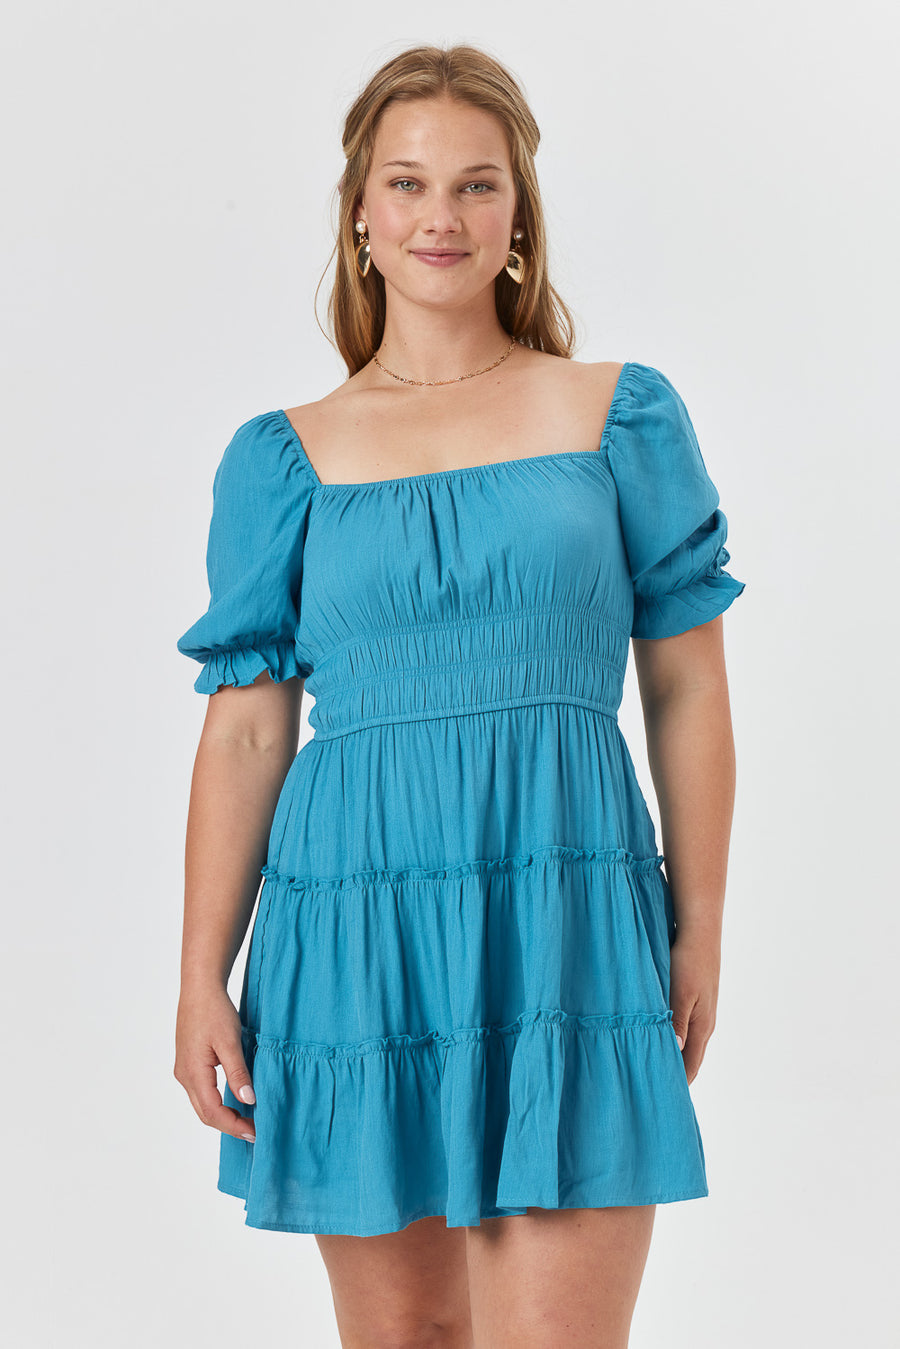 Blue Tier Dress - Trixxi Clothing